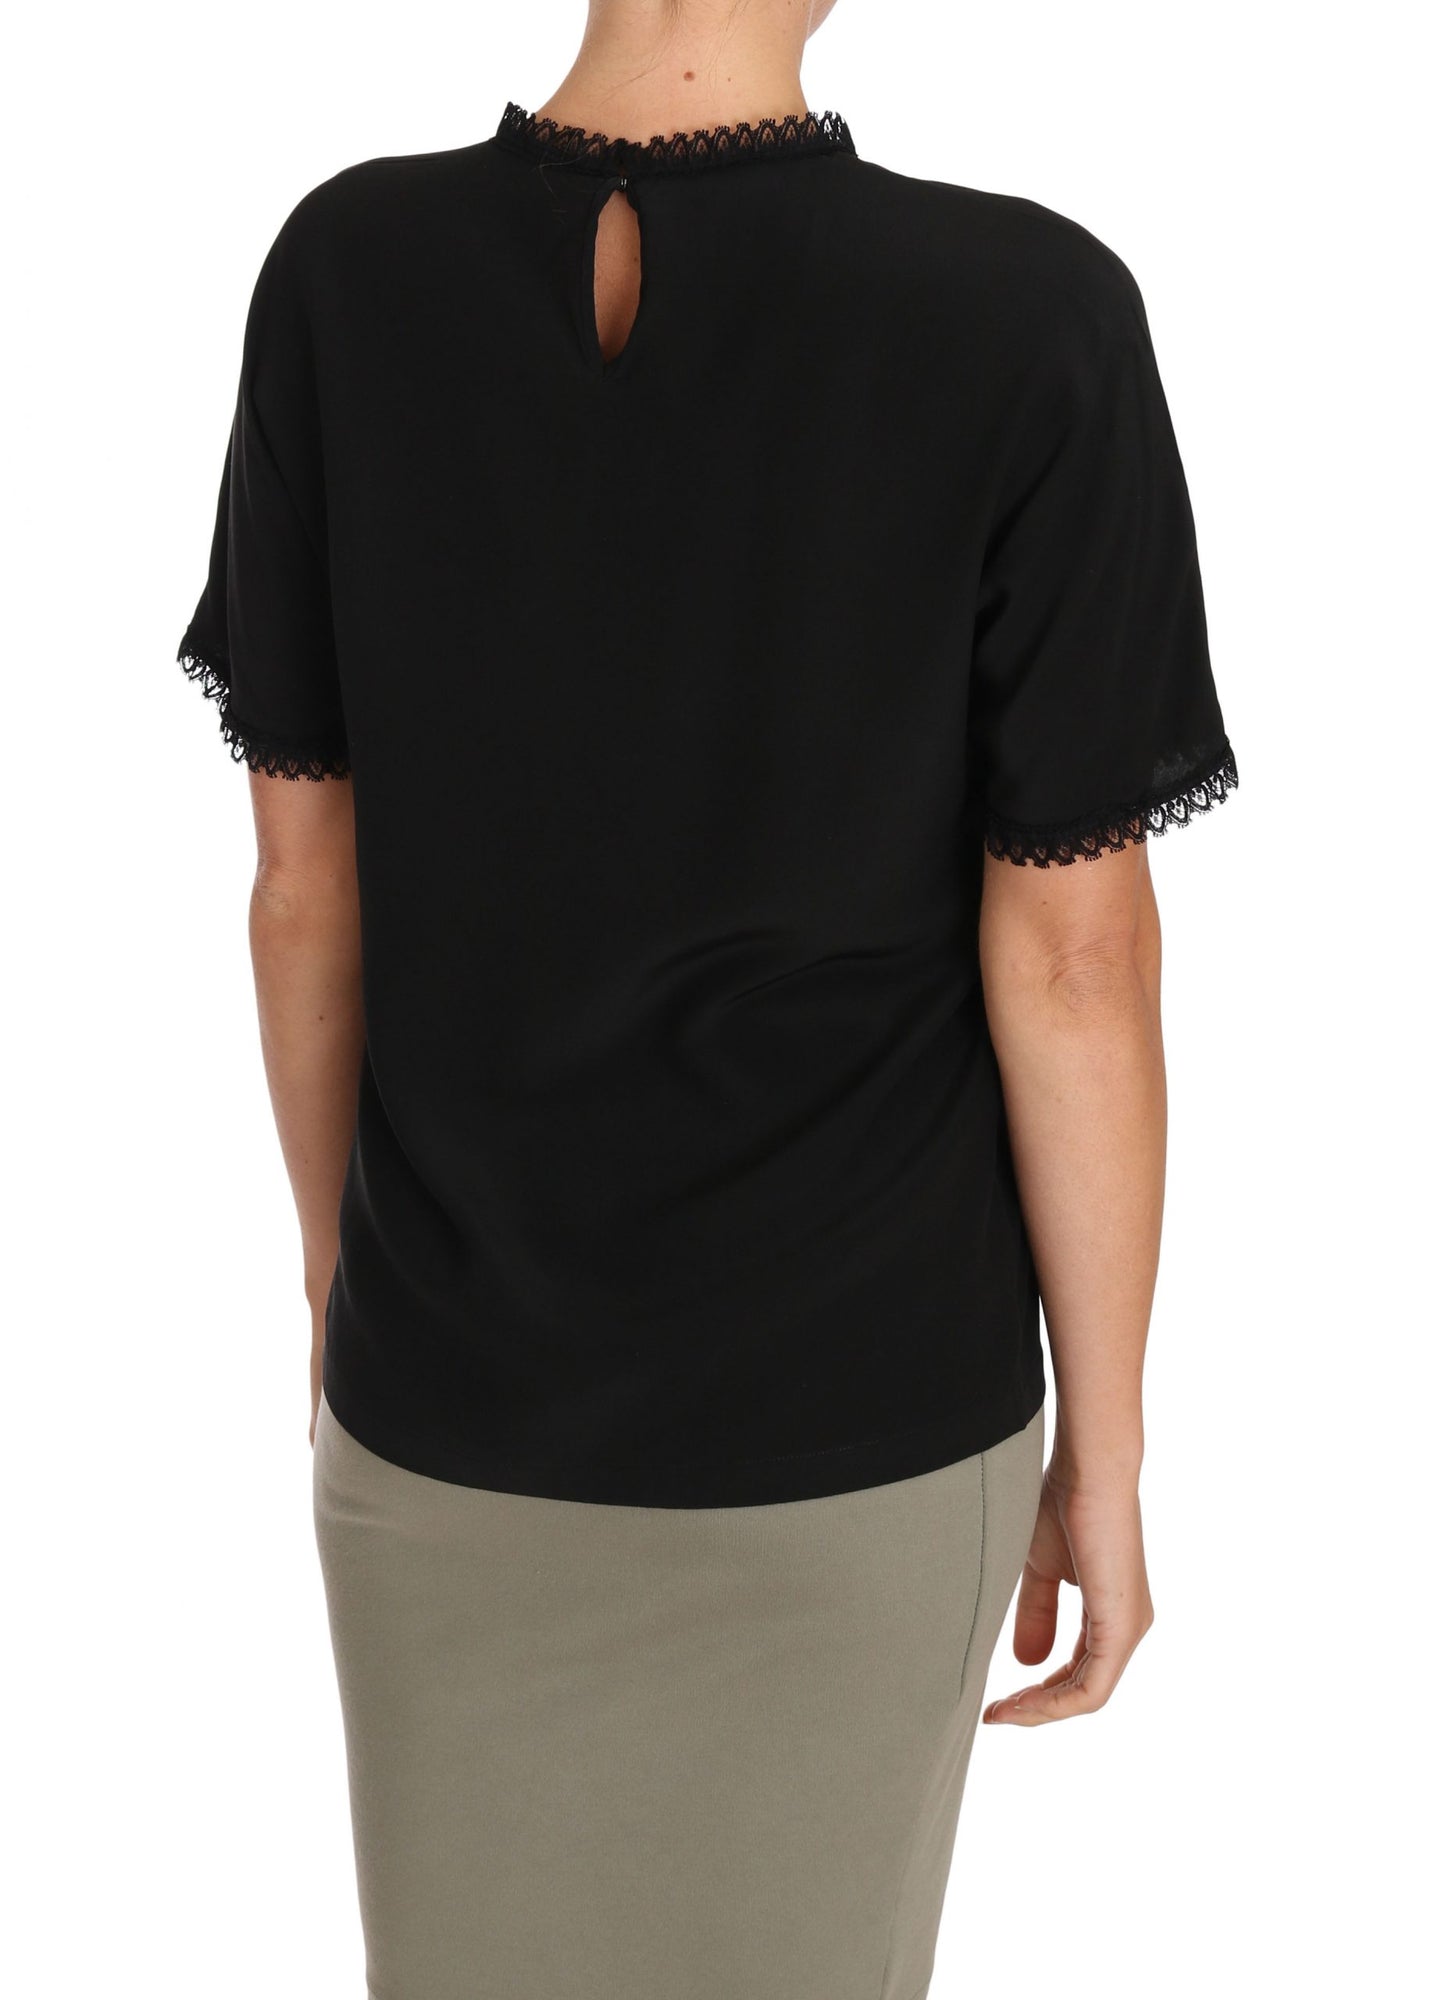 Black Silk Lace Top Blouse T-Shirt